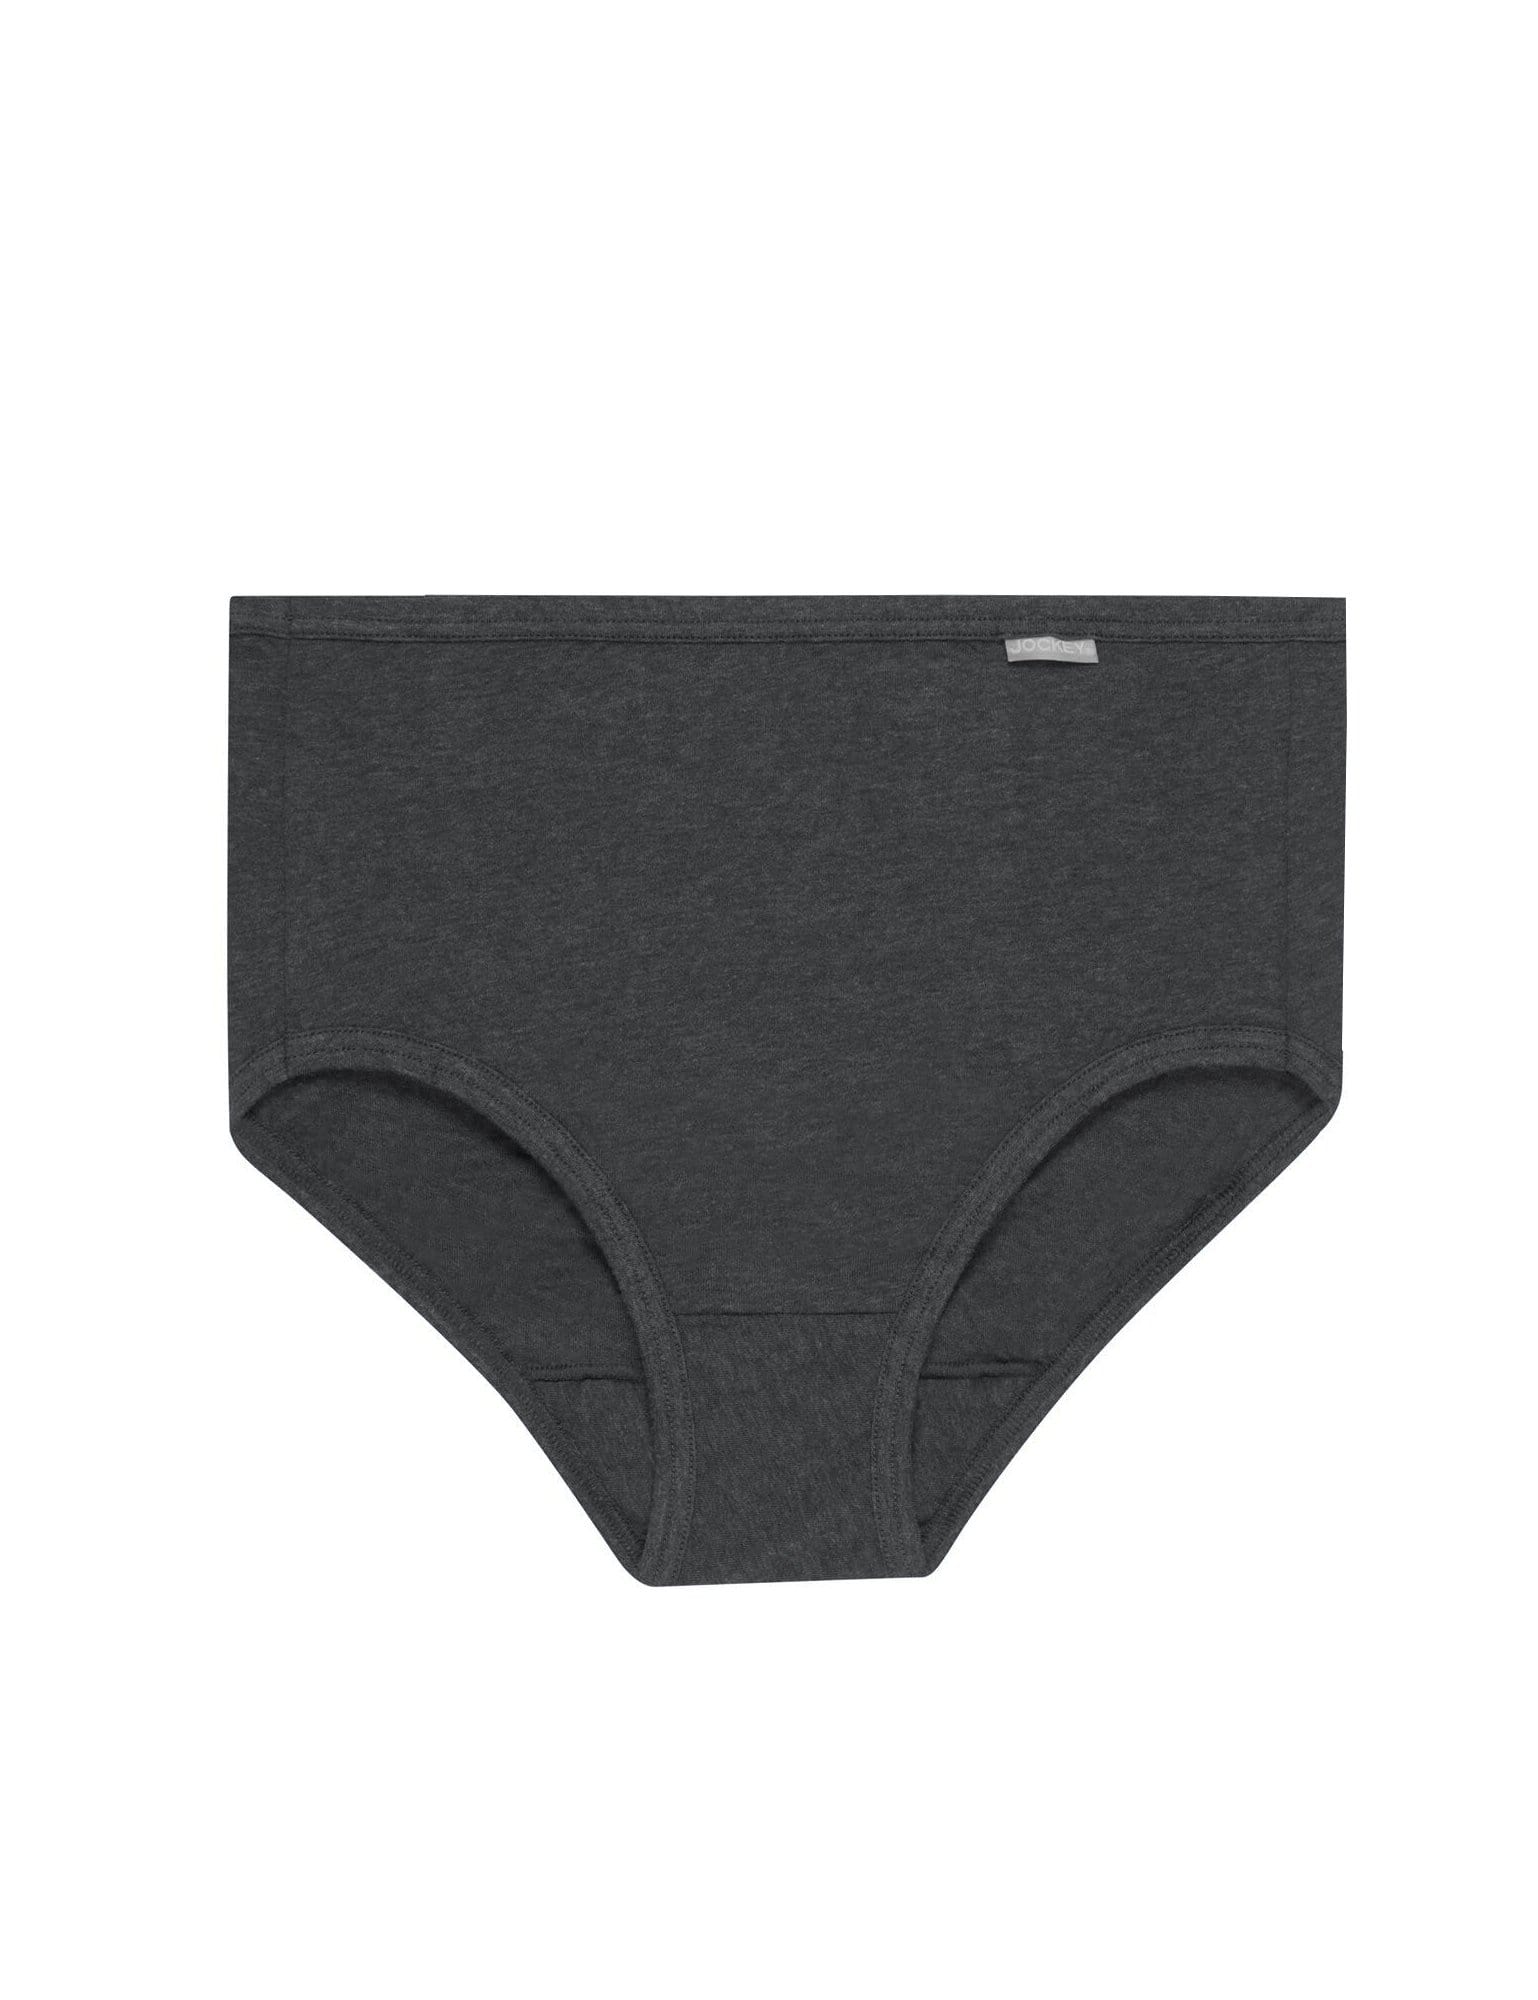 JOCKEY womens underwear Small / Grey JOCKEY - Cotton Ladies Underwear Full Brief